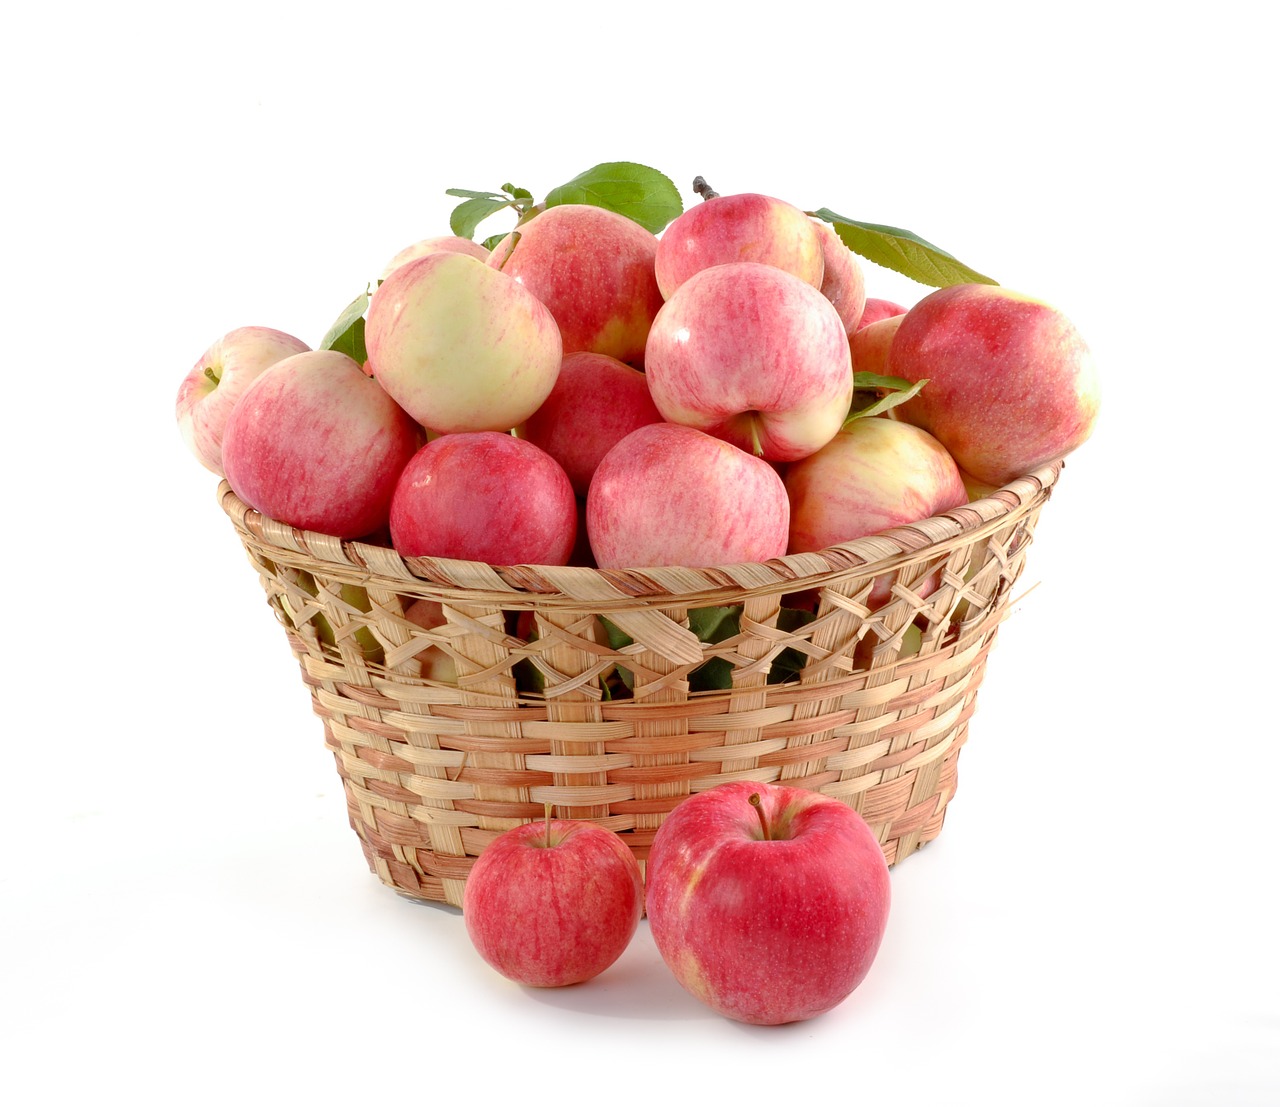 apples basket full set free photo